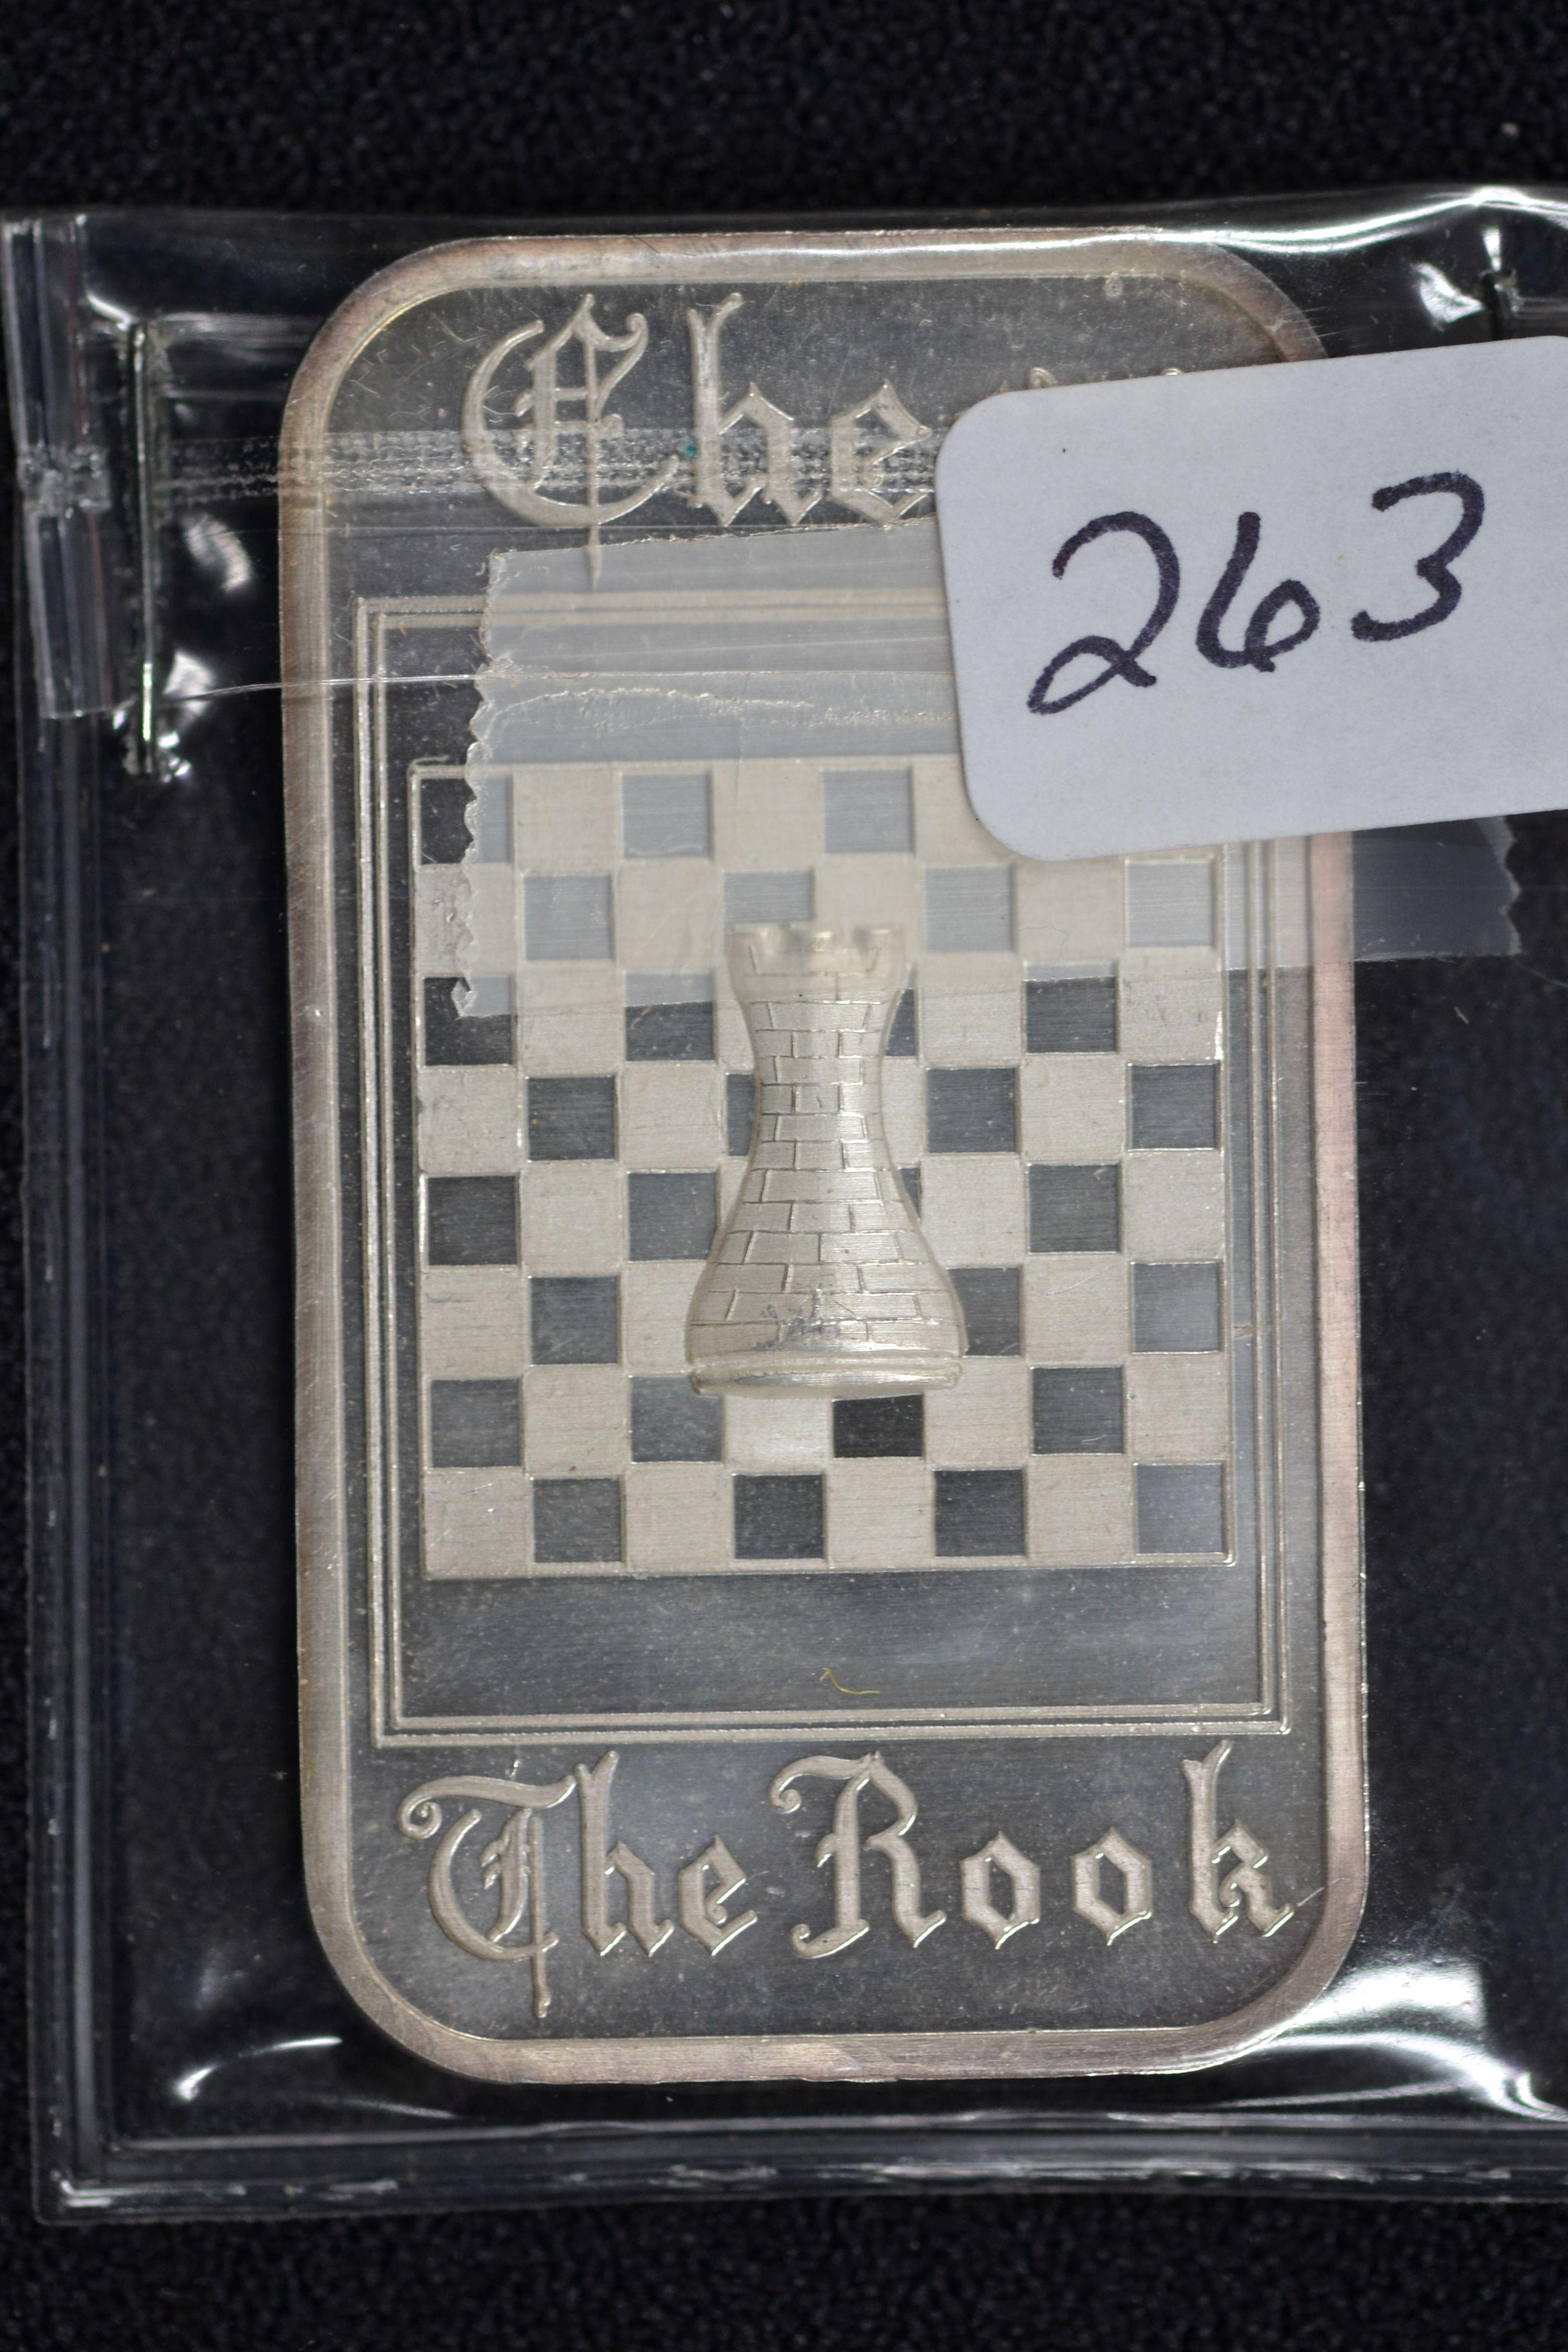 1 Oz. Silver Bar w/Chess Board and Rook Piece Scene